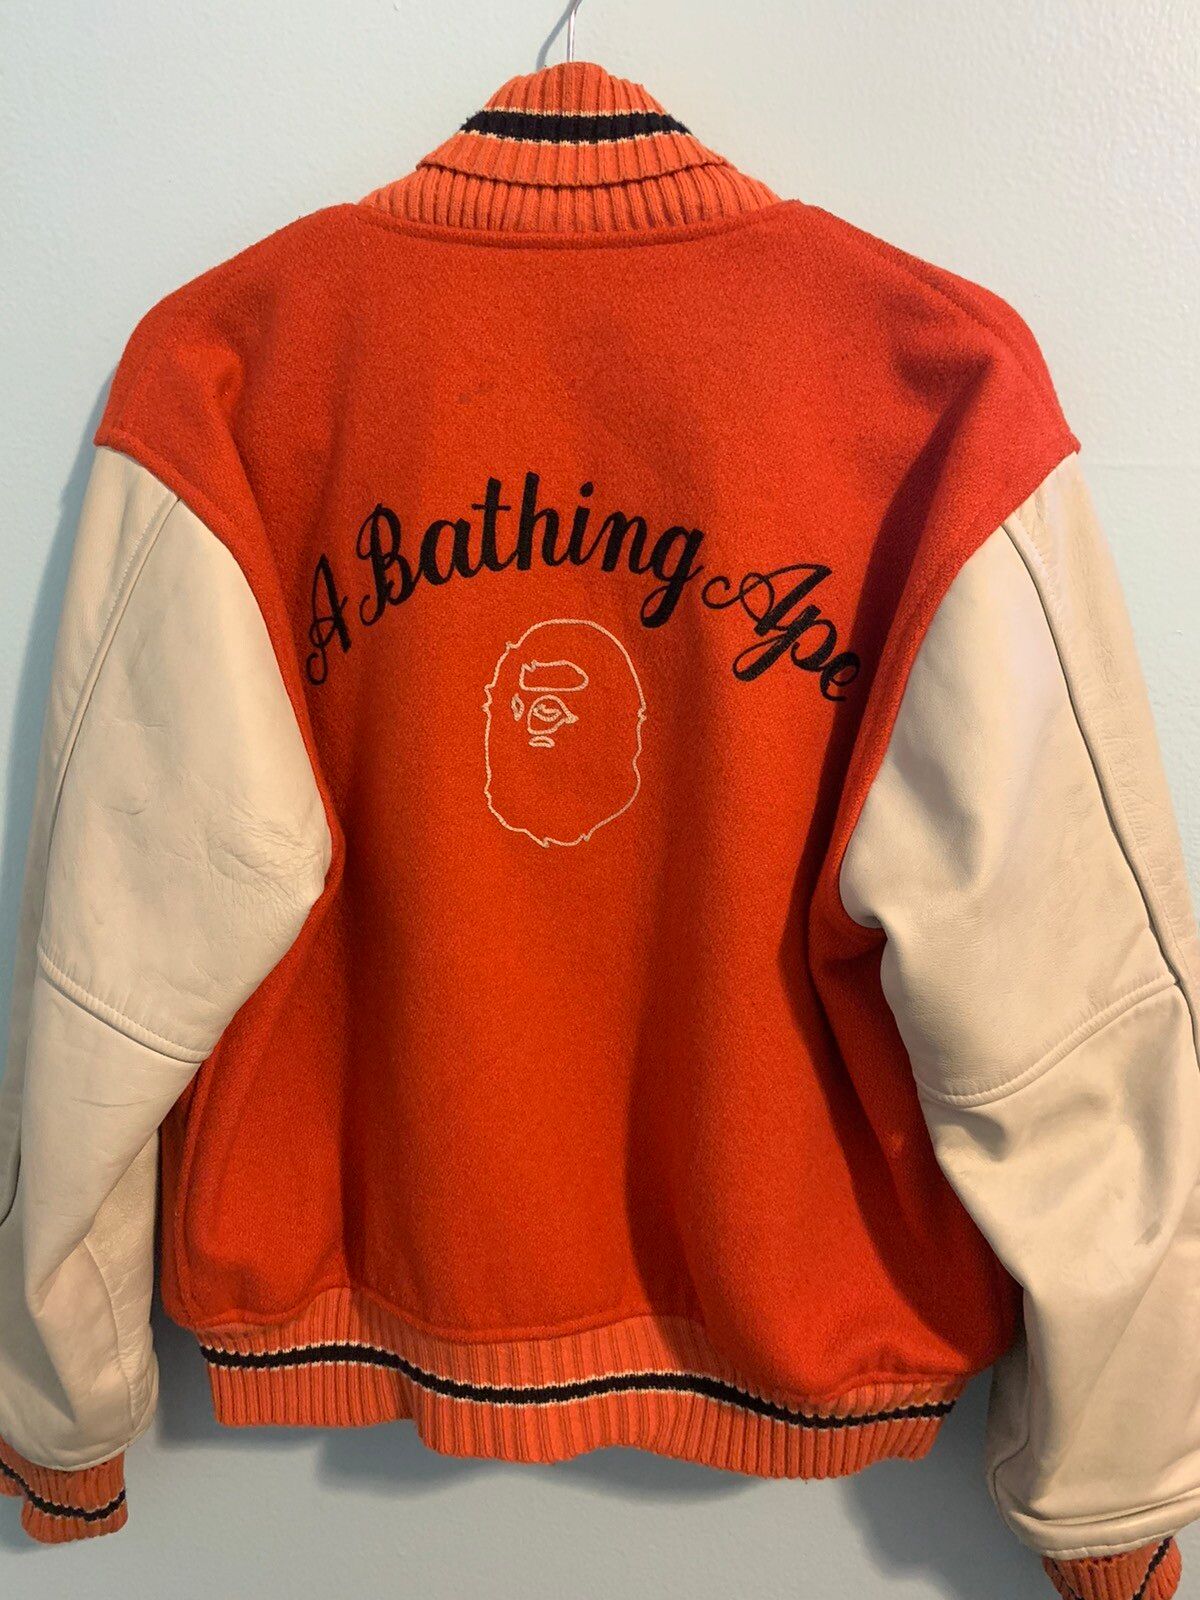 Bape 96’ & 97’ Orange Bape Varsity Jacket - Size M Size US M / EU 48-50 / 2 - 4 Thumbnail